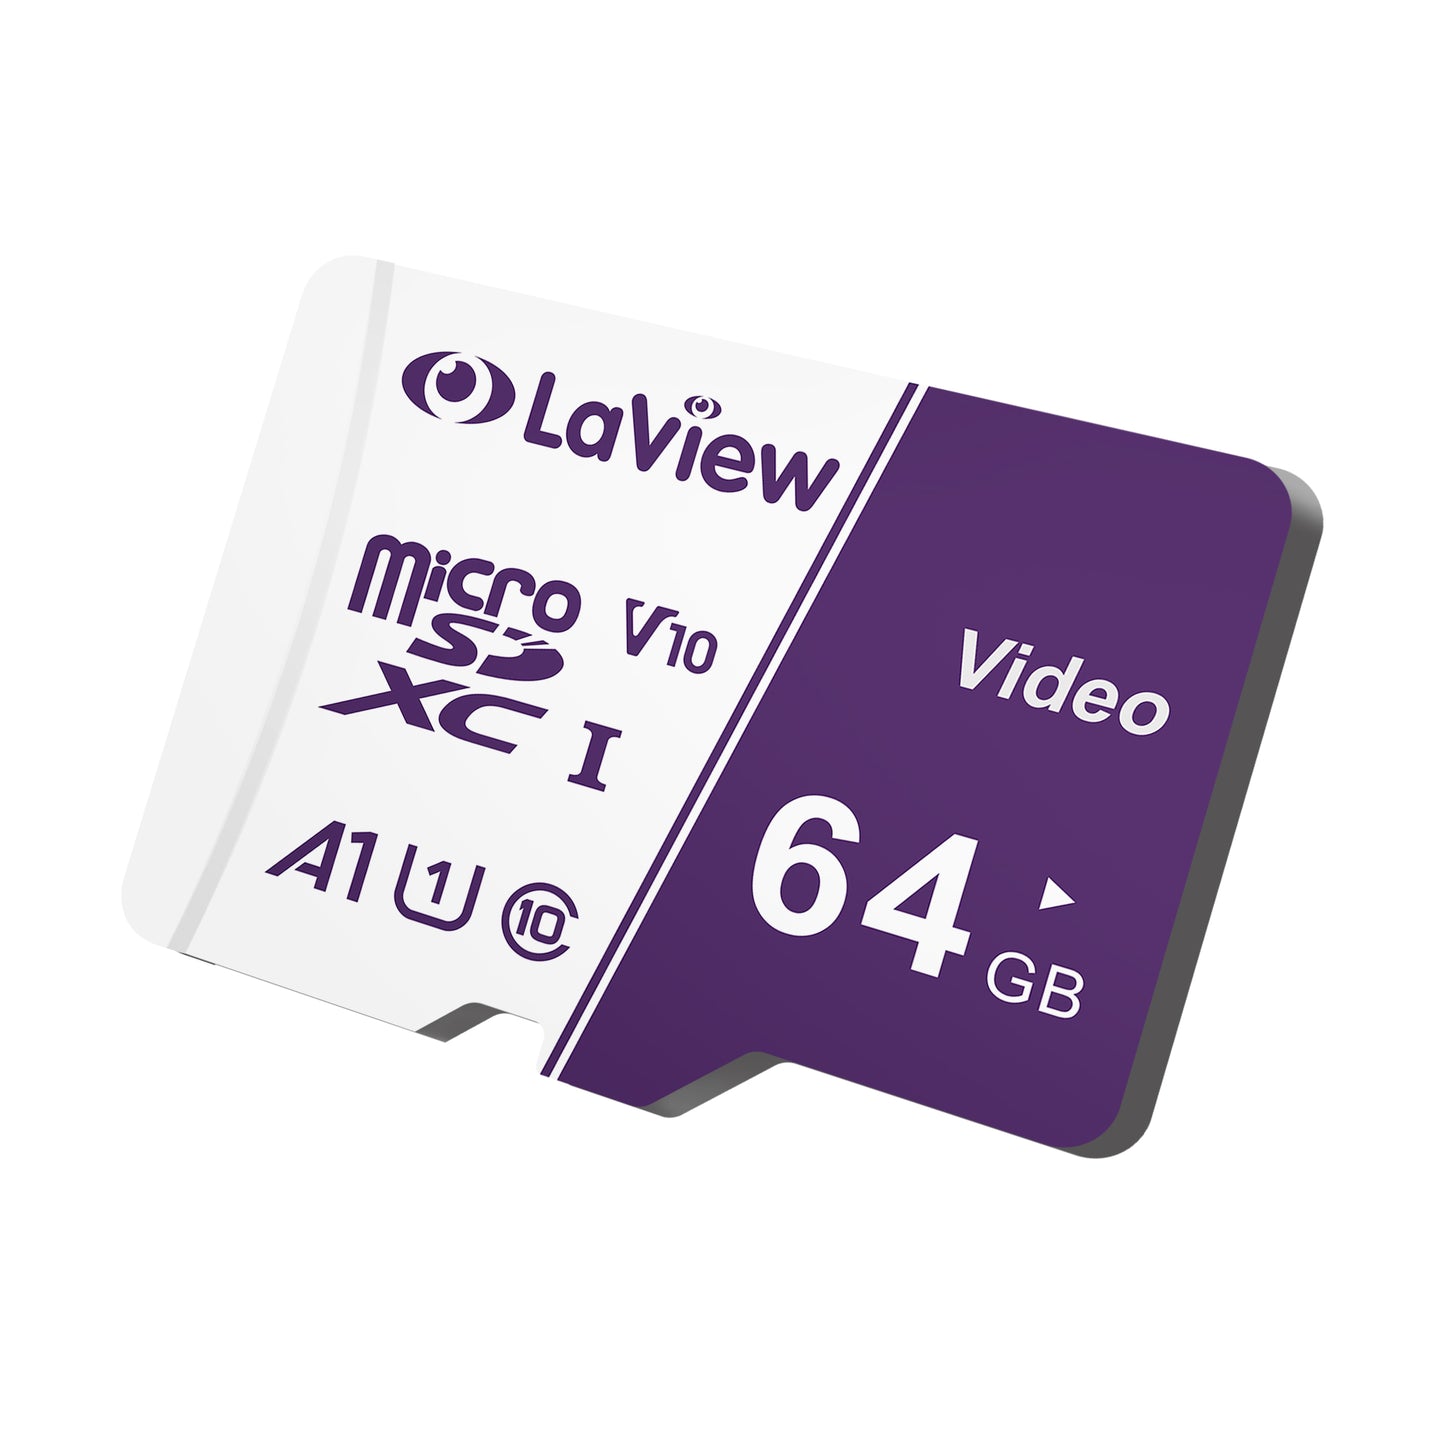 Laview MicroSD